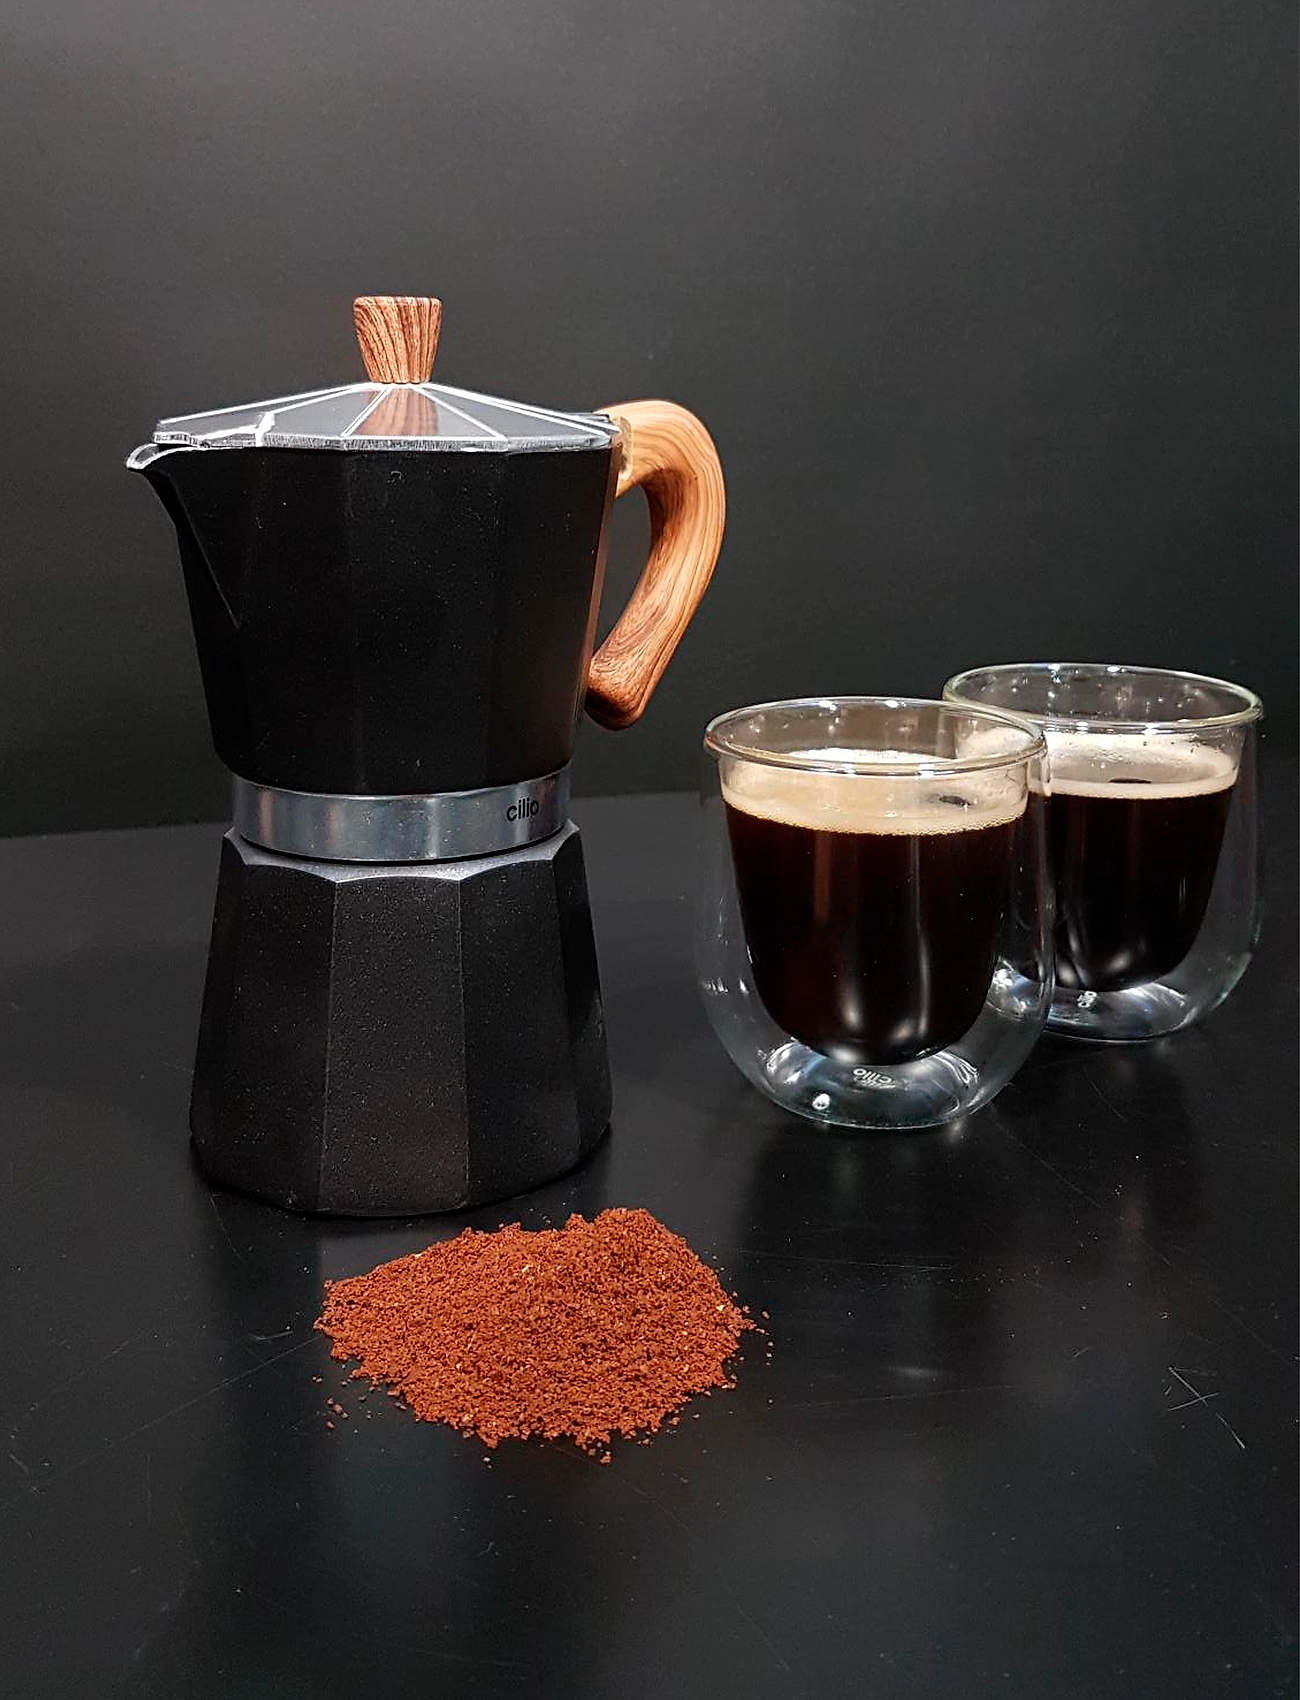 cilio - Espresso maker CLASSICO NATURA 3 cups - moka gryter - black - 1